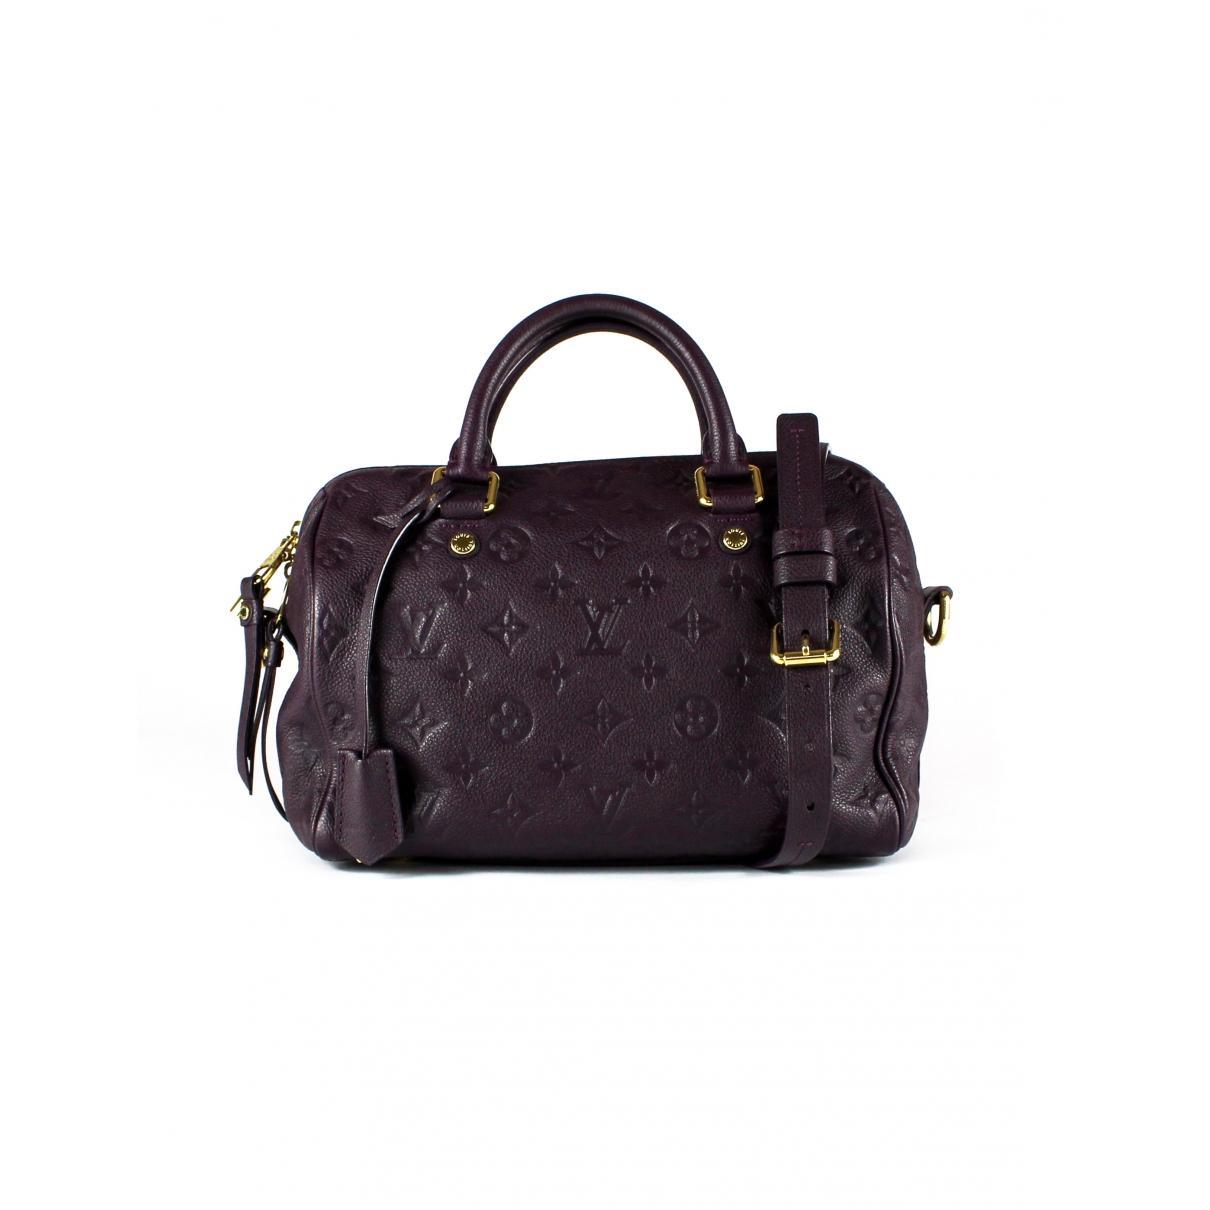 Louis Vuitton Purple Leather Handbag in Purple - Lyst